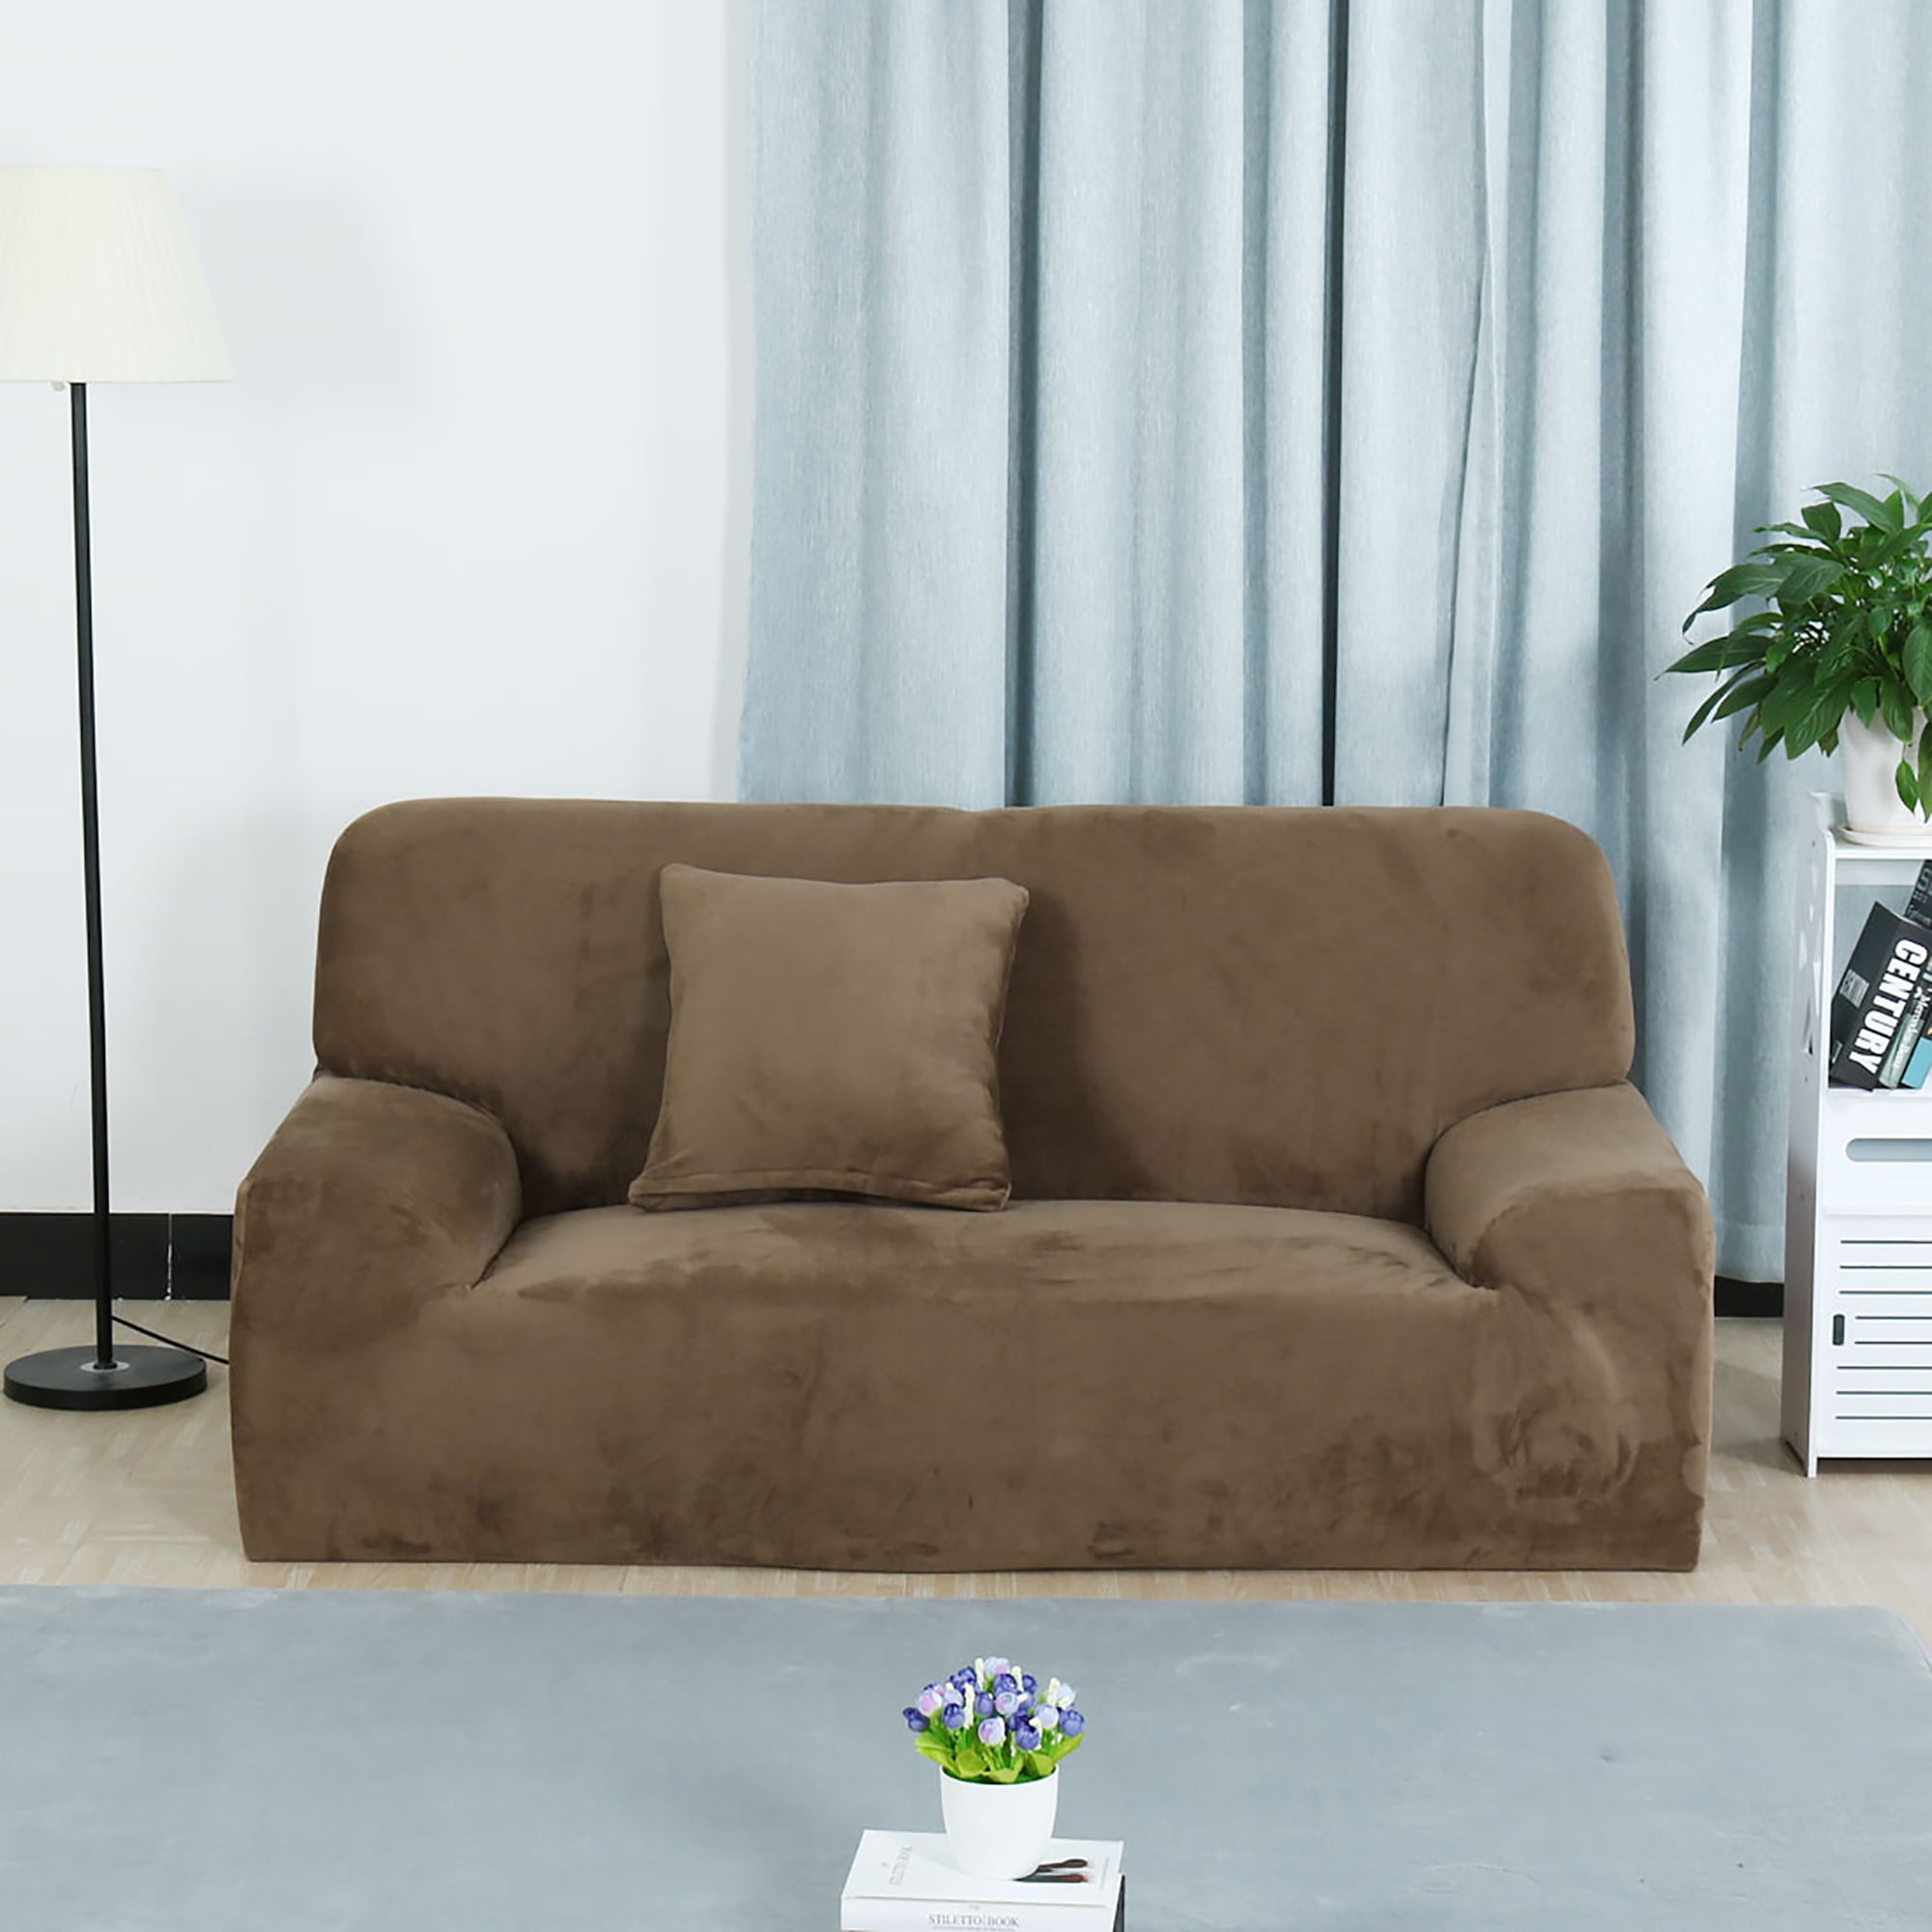 Details about   Velvet Fabric Elastic Sofa Cover Stretch Slip-resistant Cover For Living Room 